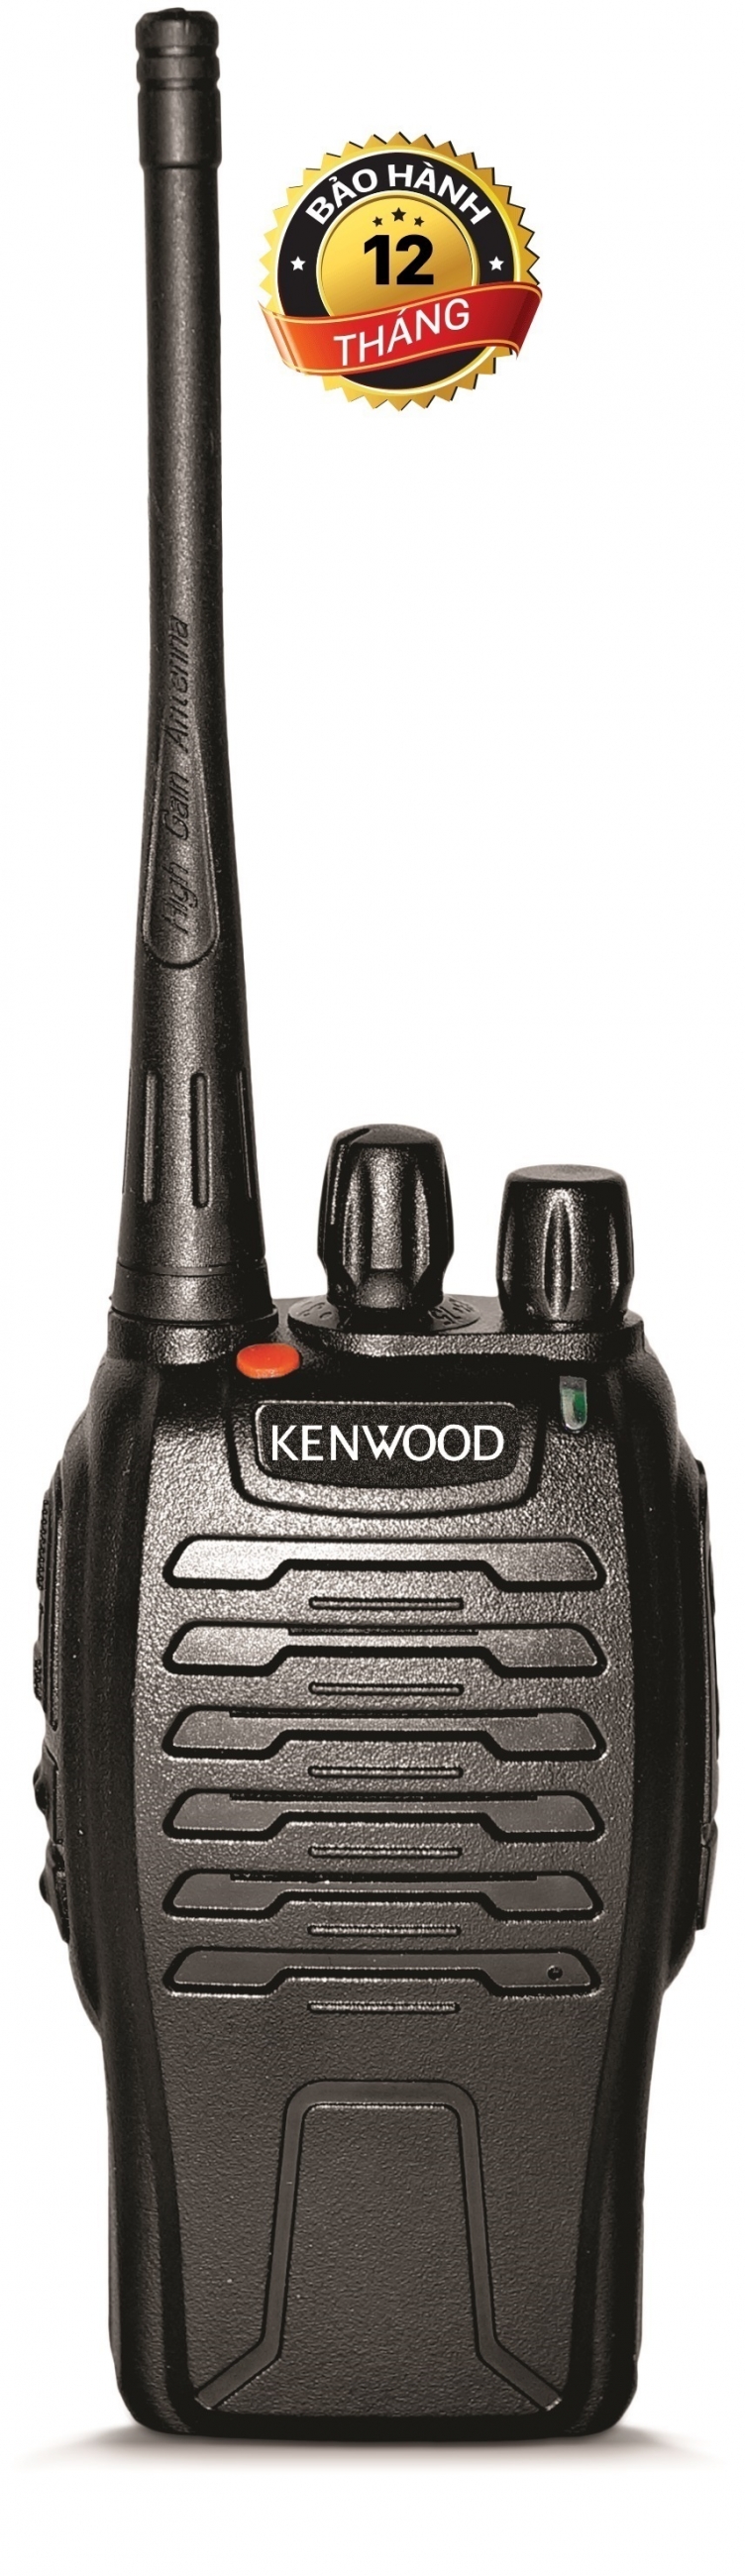 Bộ đàm Kenwood TK308/TK-308